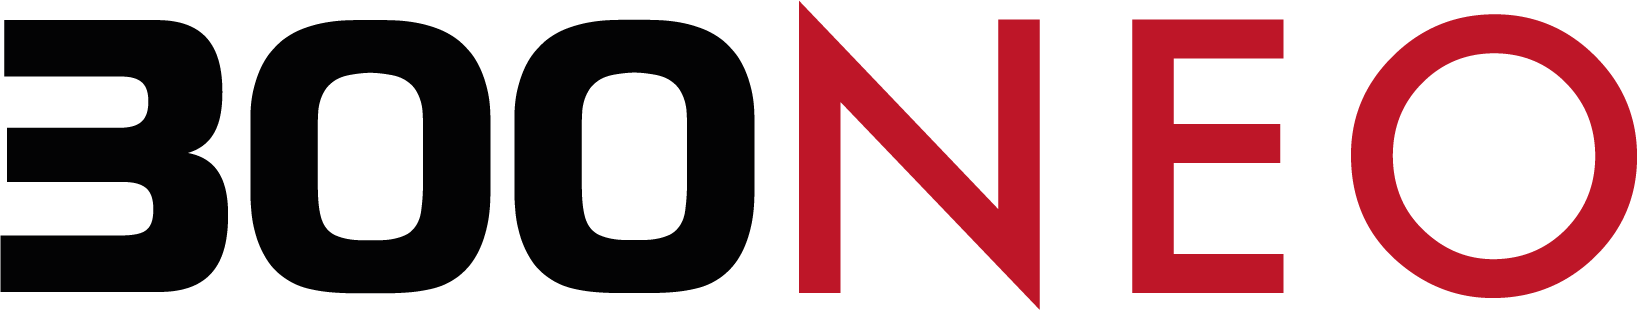 300NEO logo